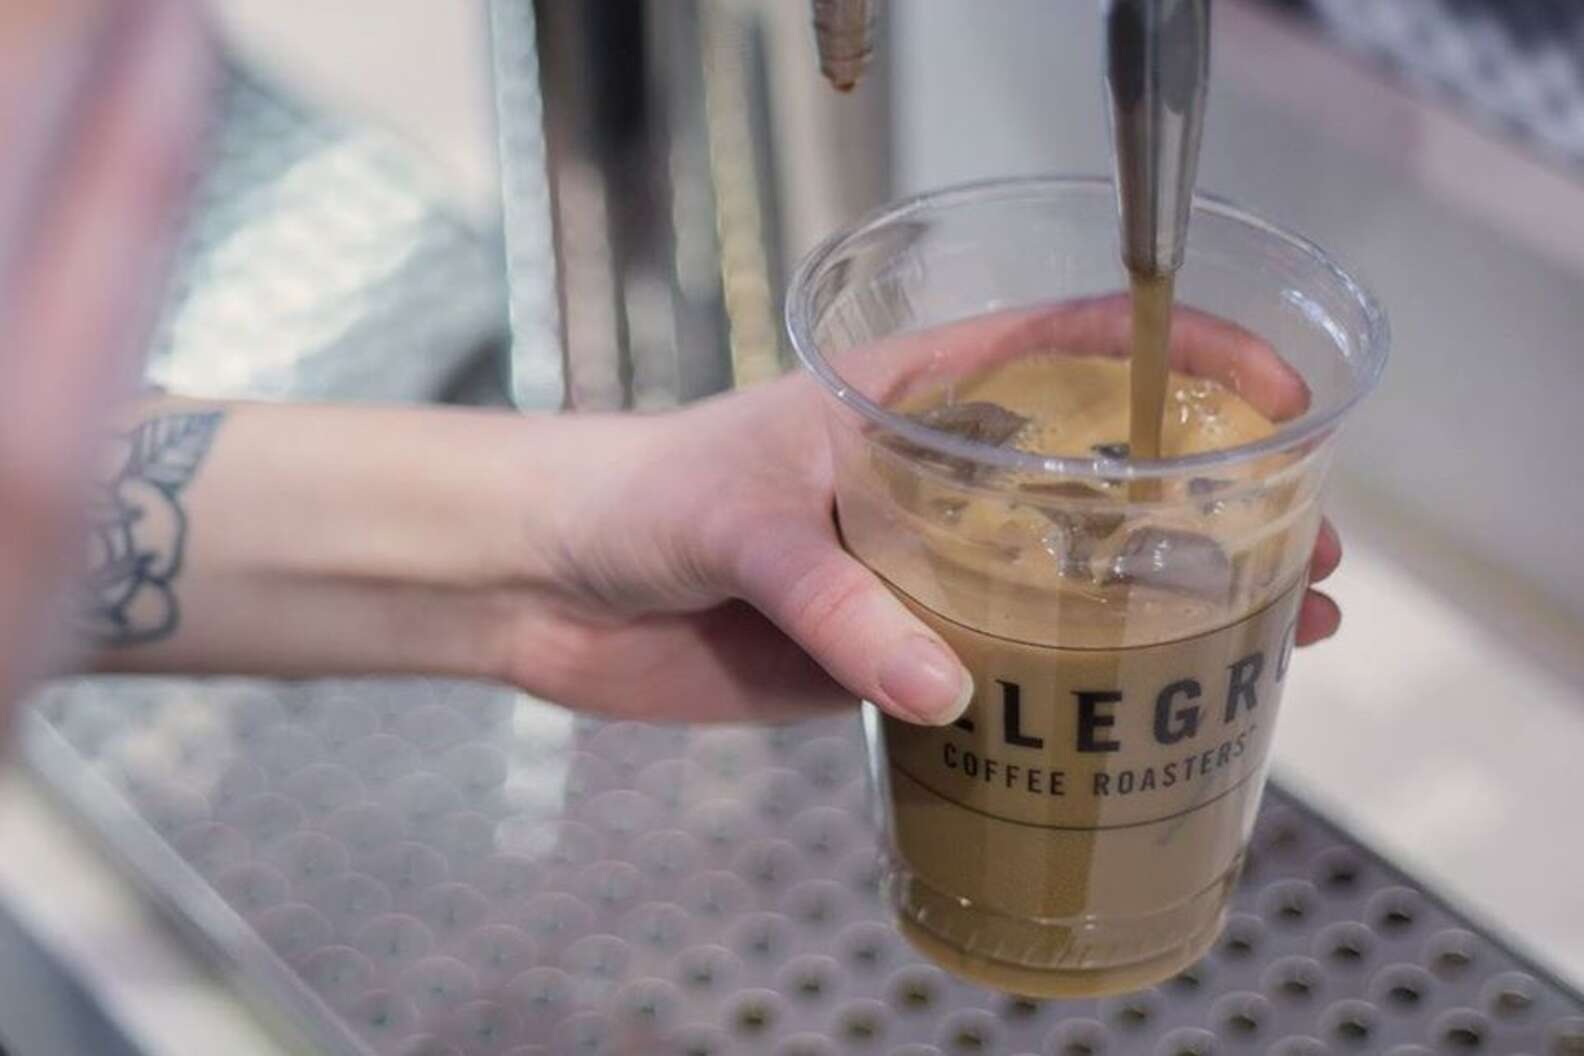 Allegro Coffee Roasters